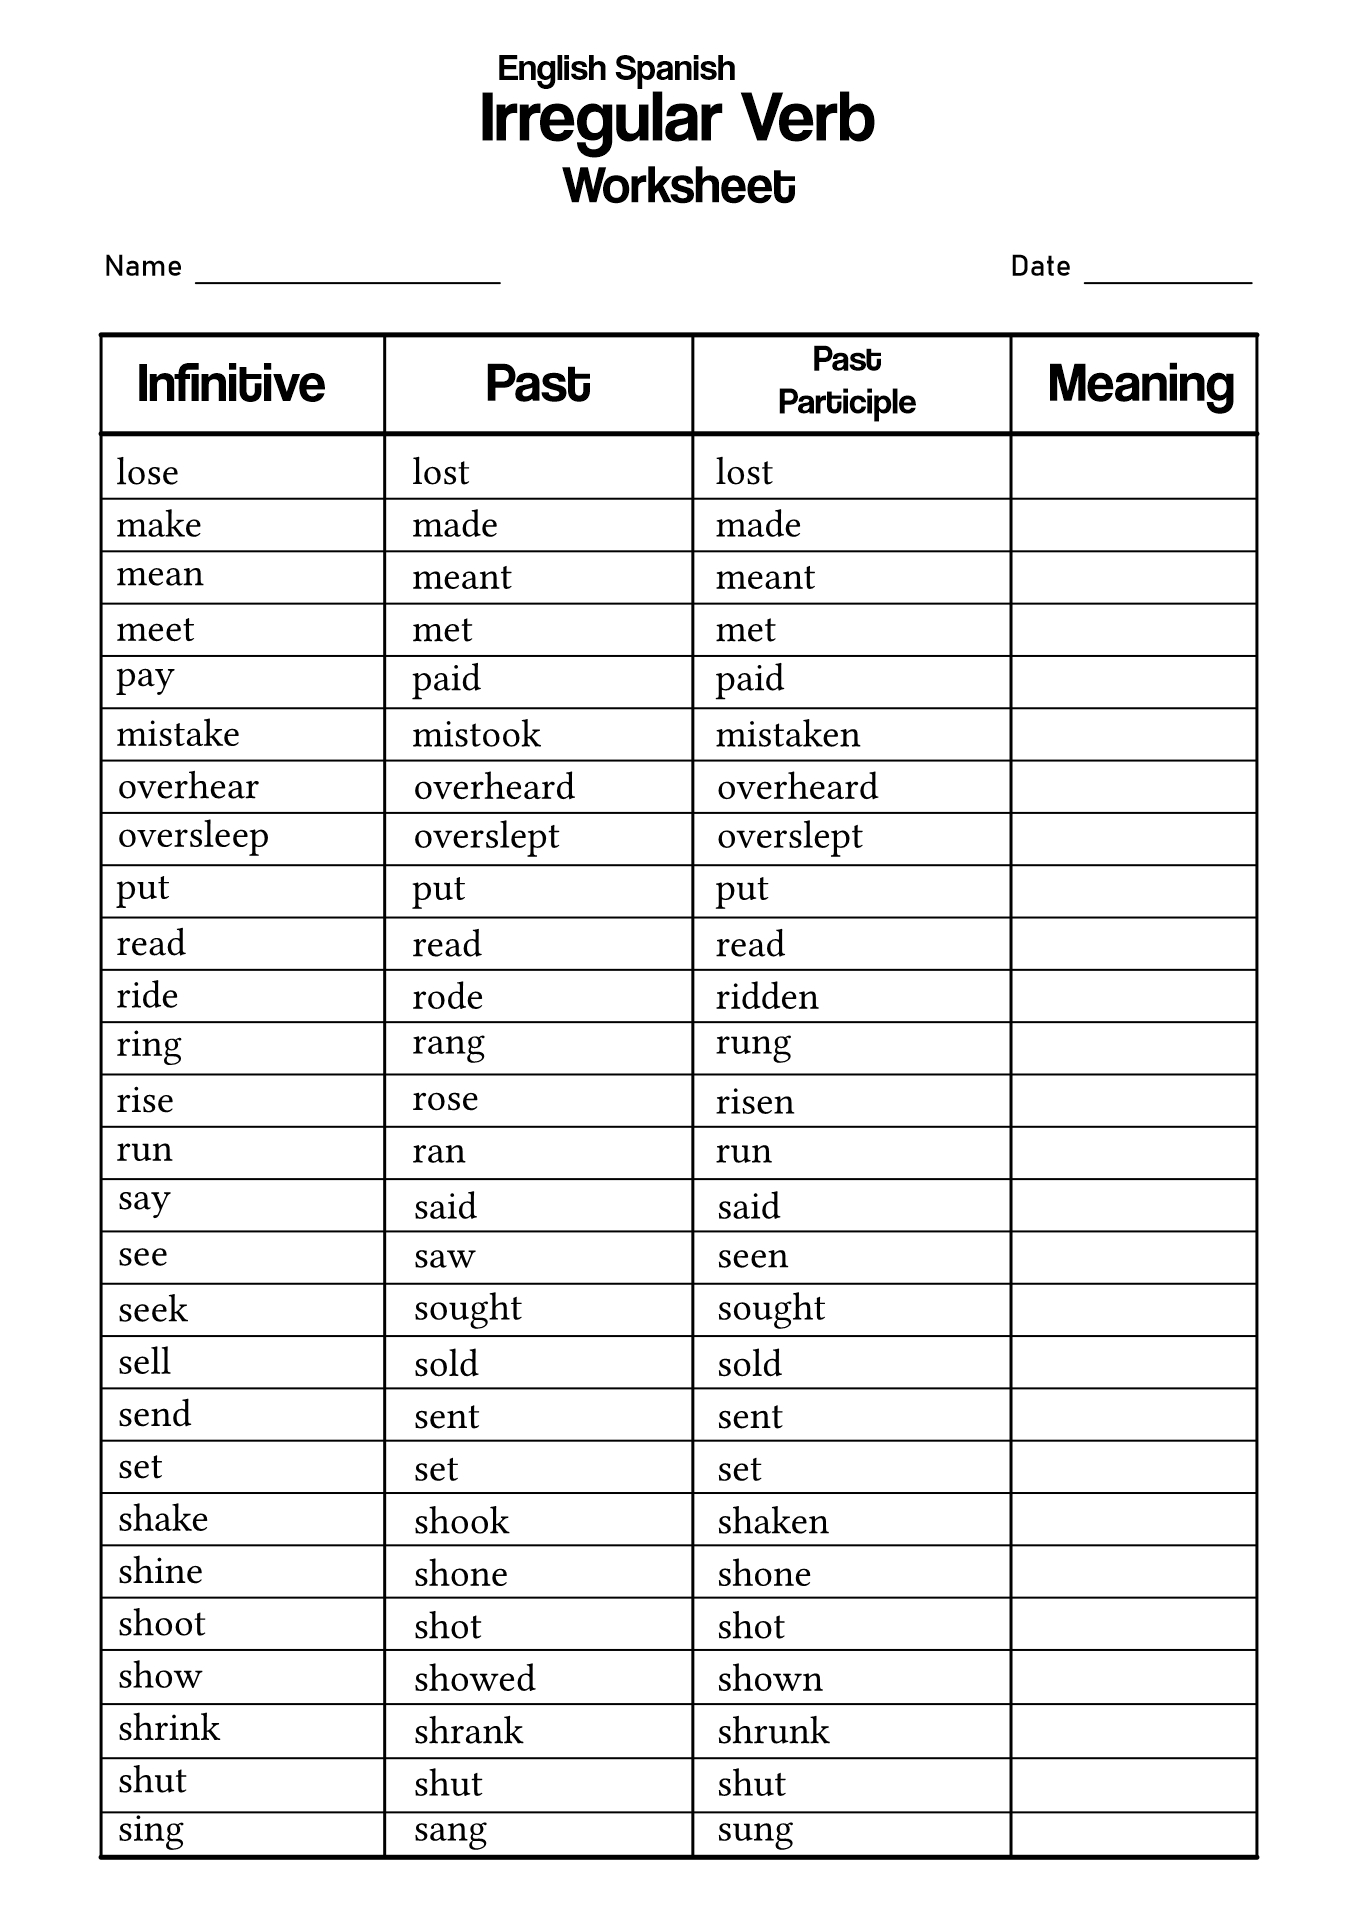 English and Spanish Irregular Verbs Worksheet